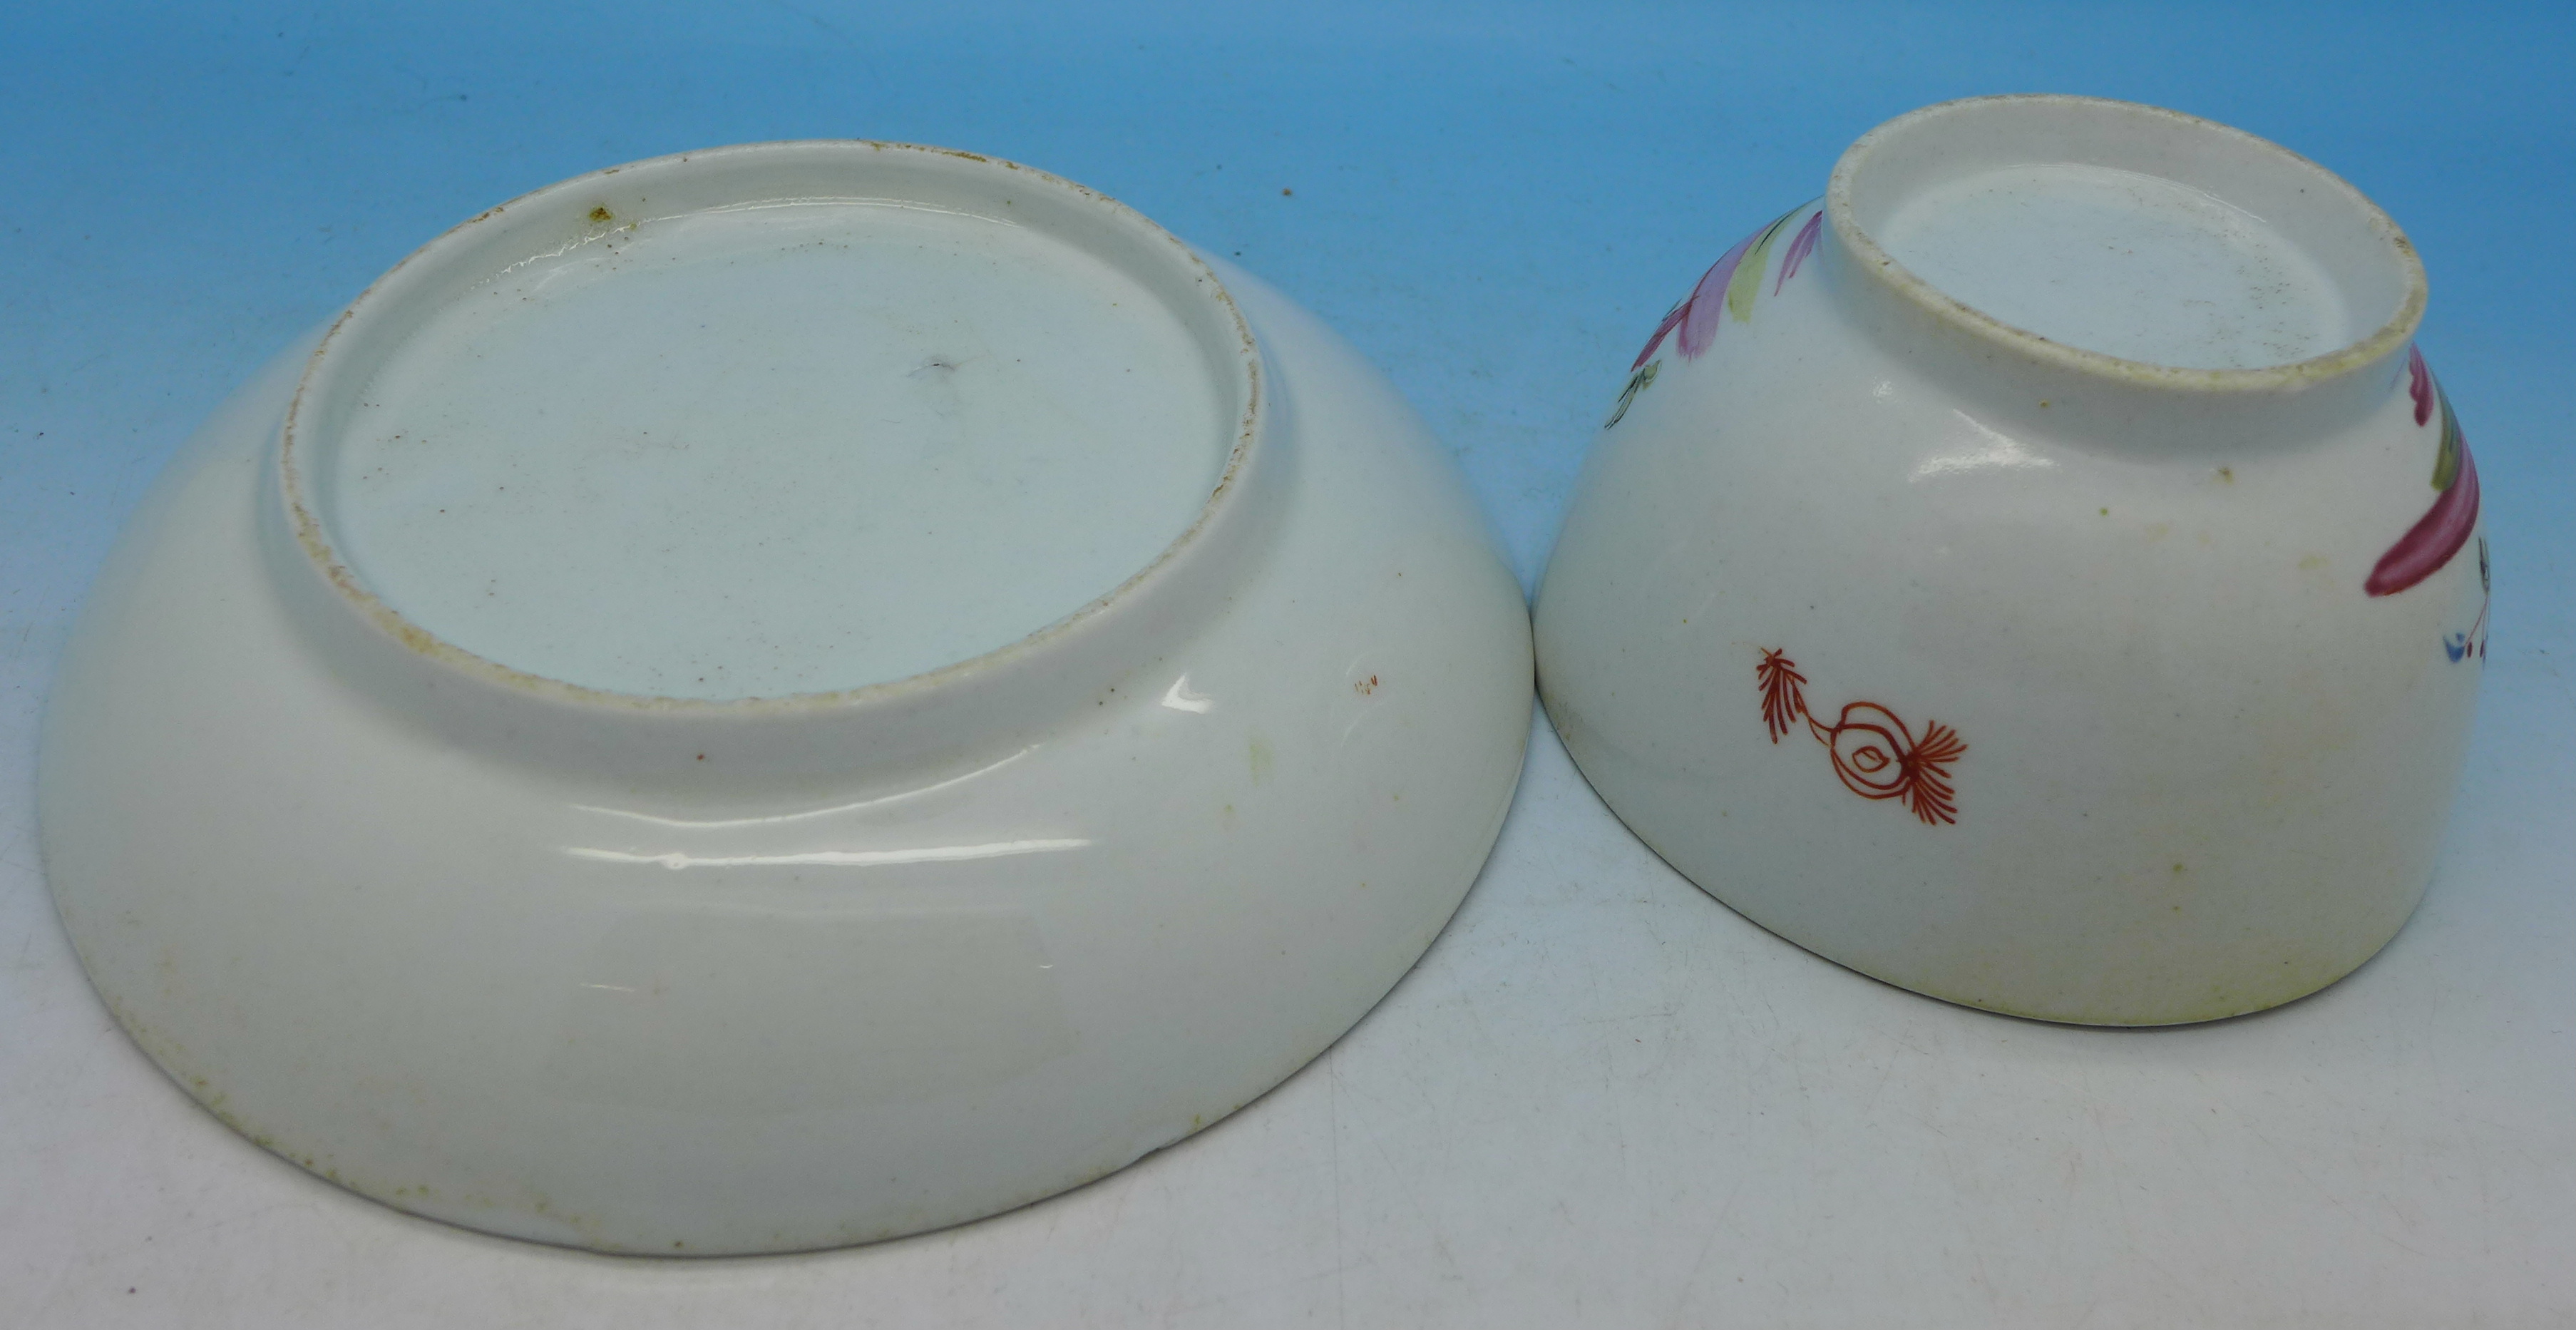 An early English tea bowl and saucer - Image 3 of 3